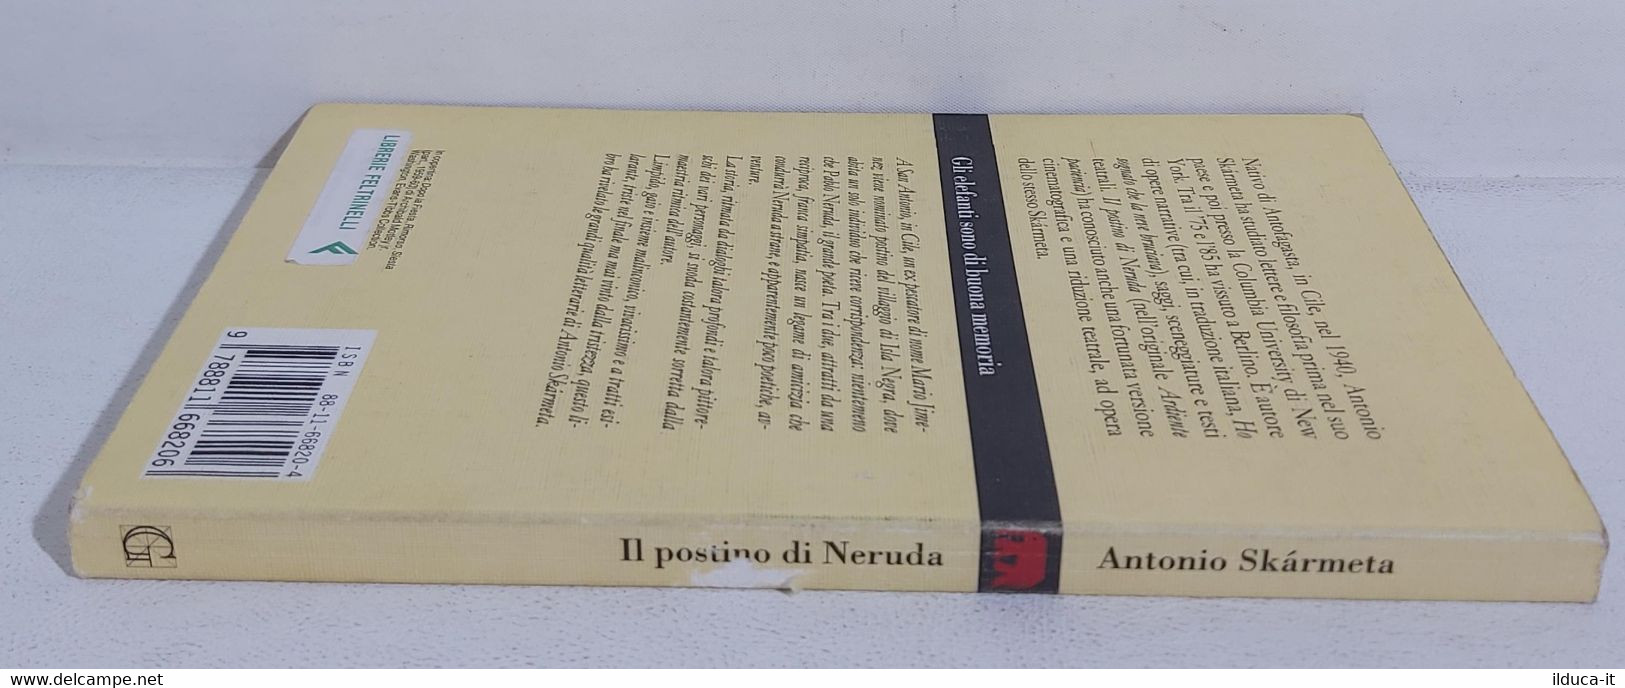 I106604 Antonio Skarmeta - Il Postino Di Neruda - Garzanti 1994 - Nuevos, Cuentos